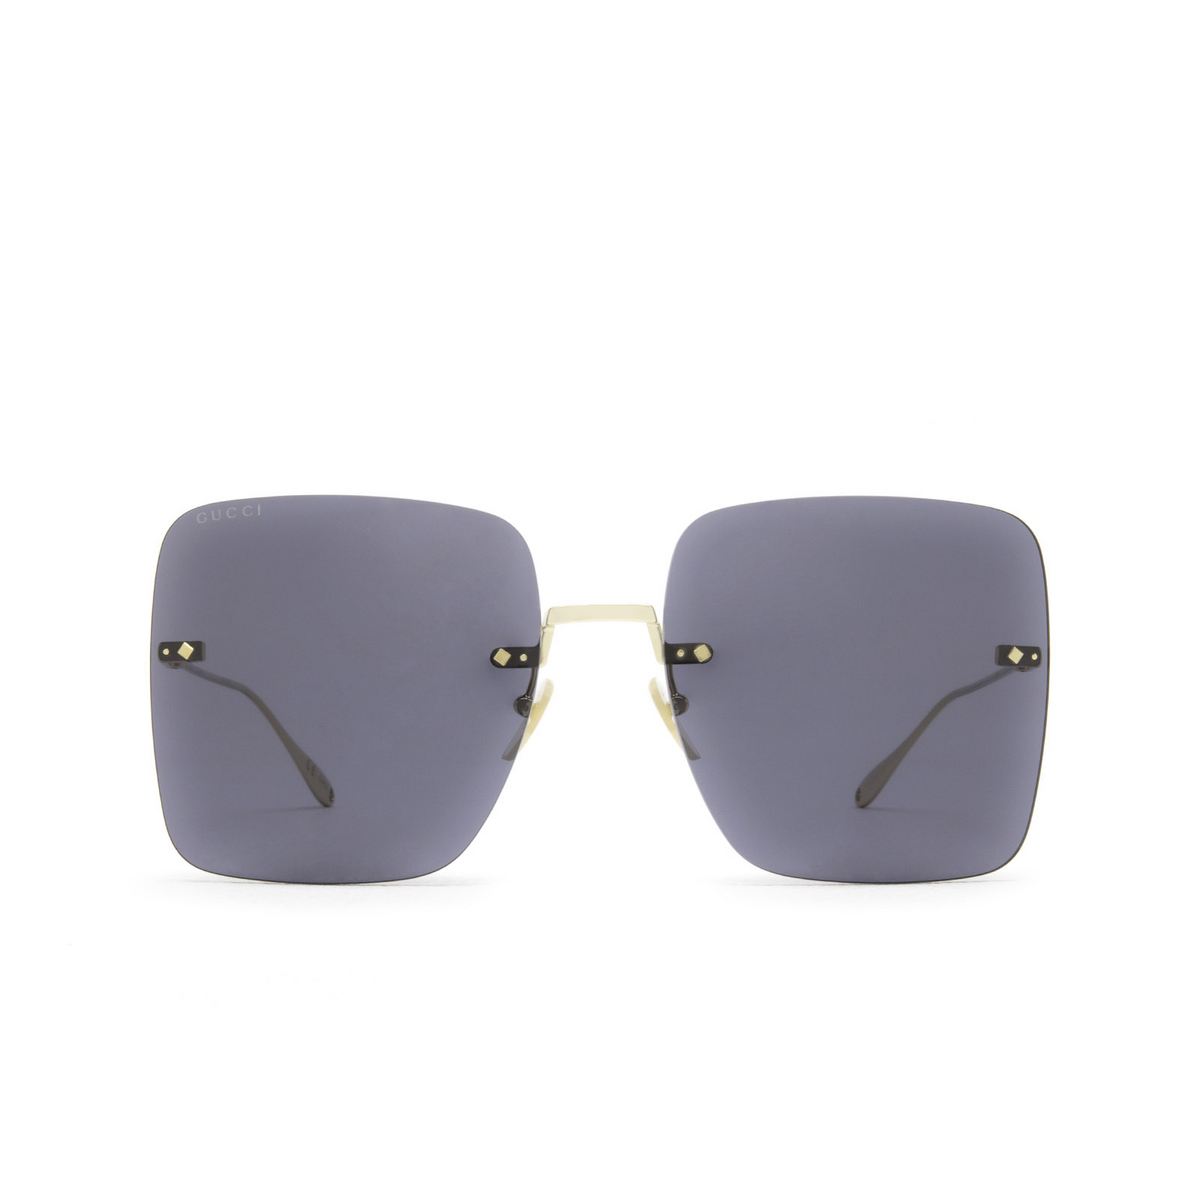 Gucci® Square Sunglasses: GG1147S color Gold 001 - front view.